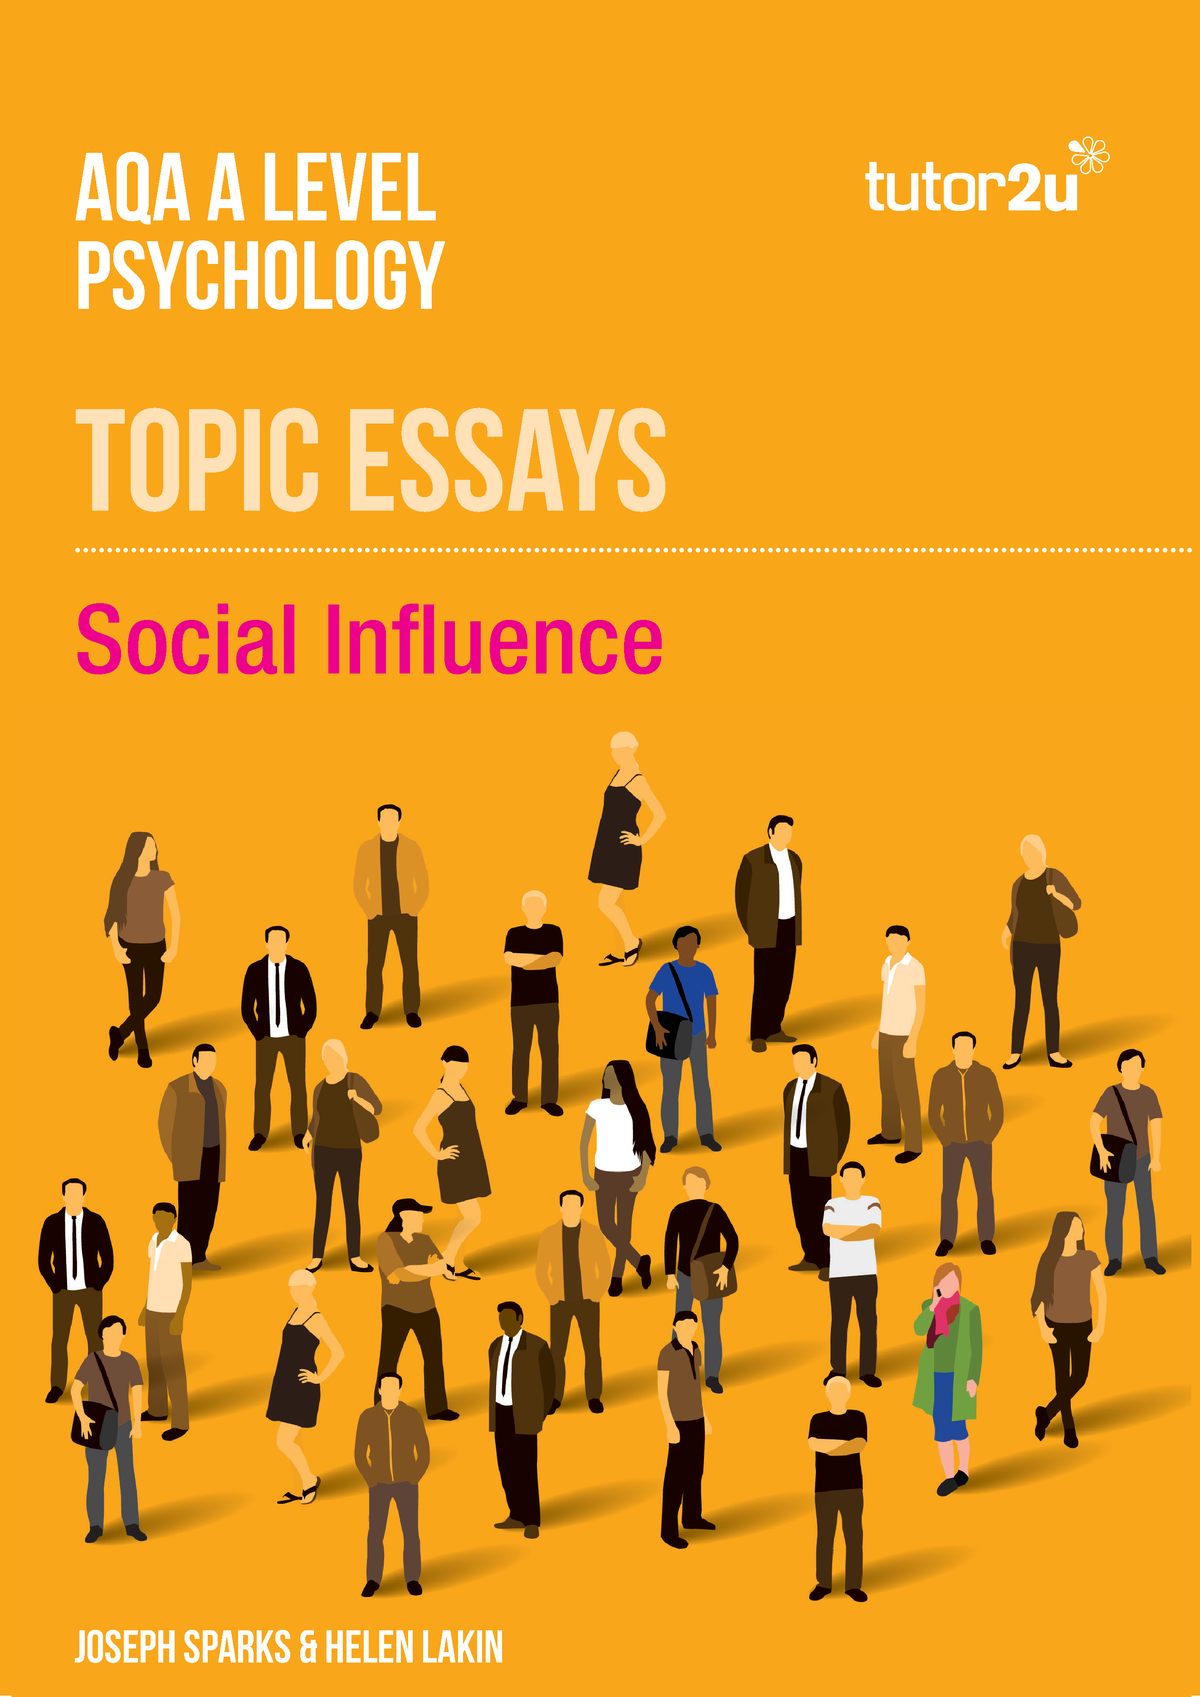 aqa a level psychology topic essays social influence